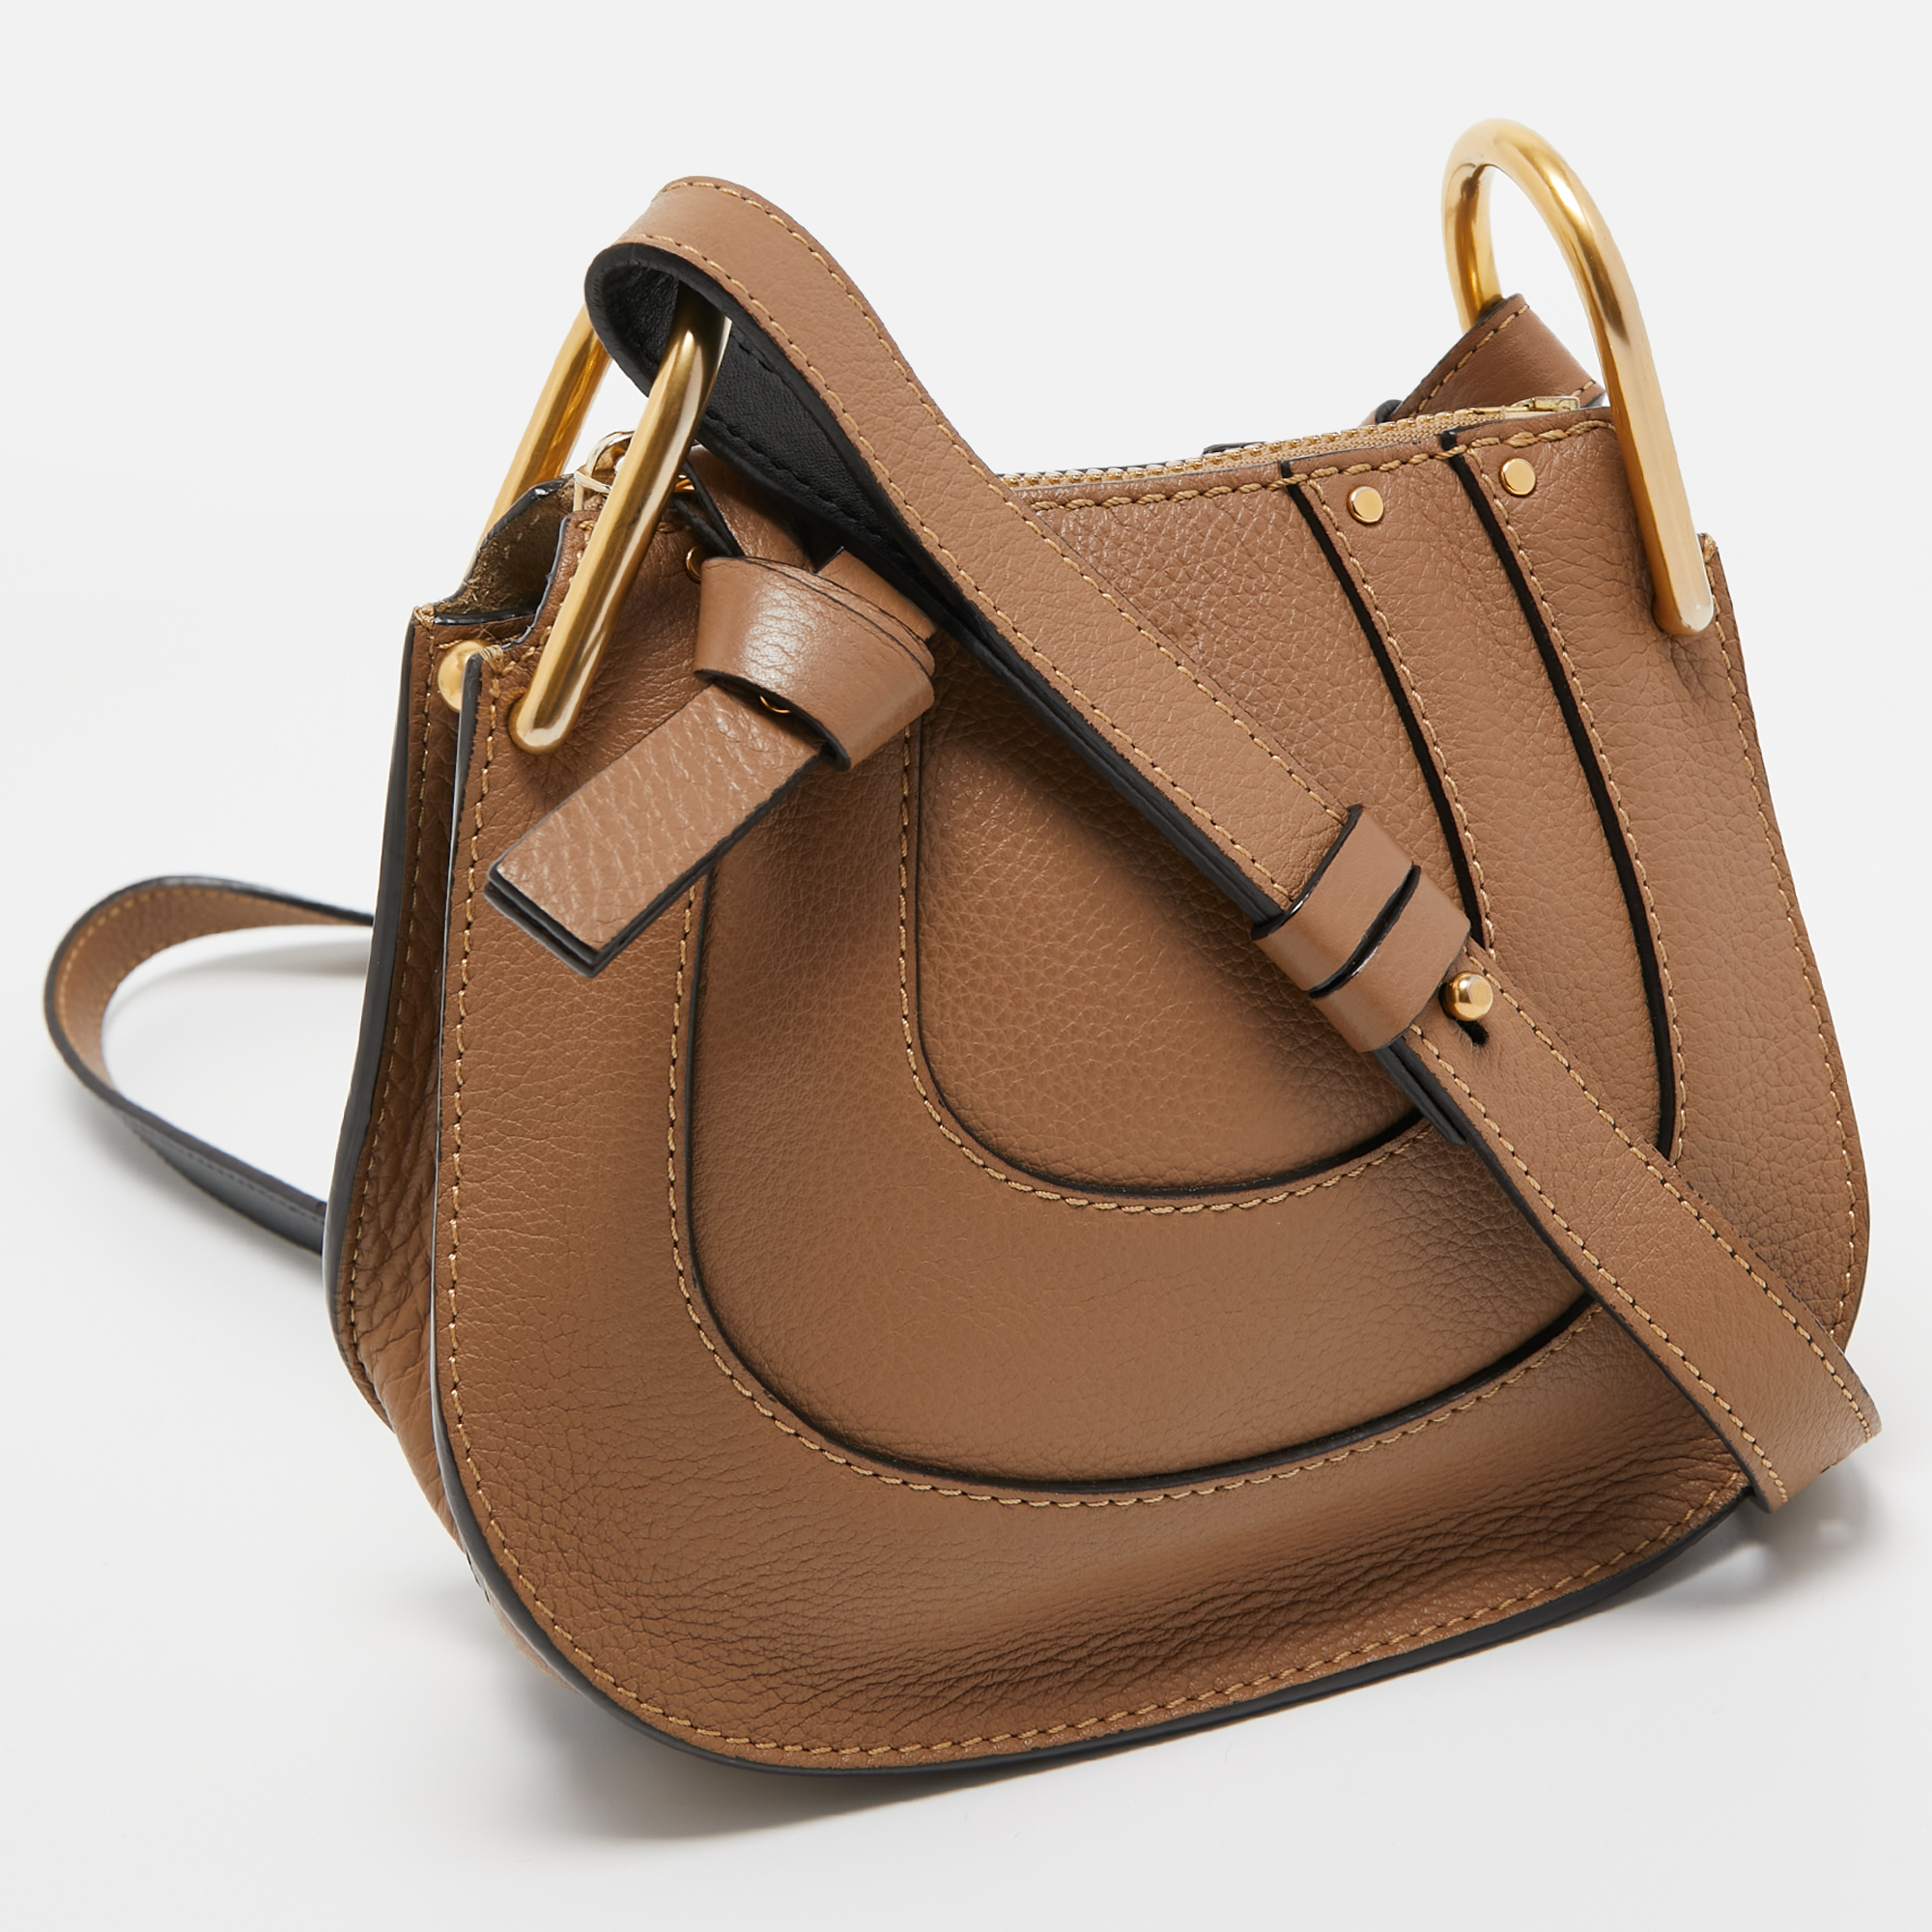 Chloe Brown Leather Nano Hayley Crossbody Bag